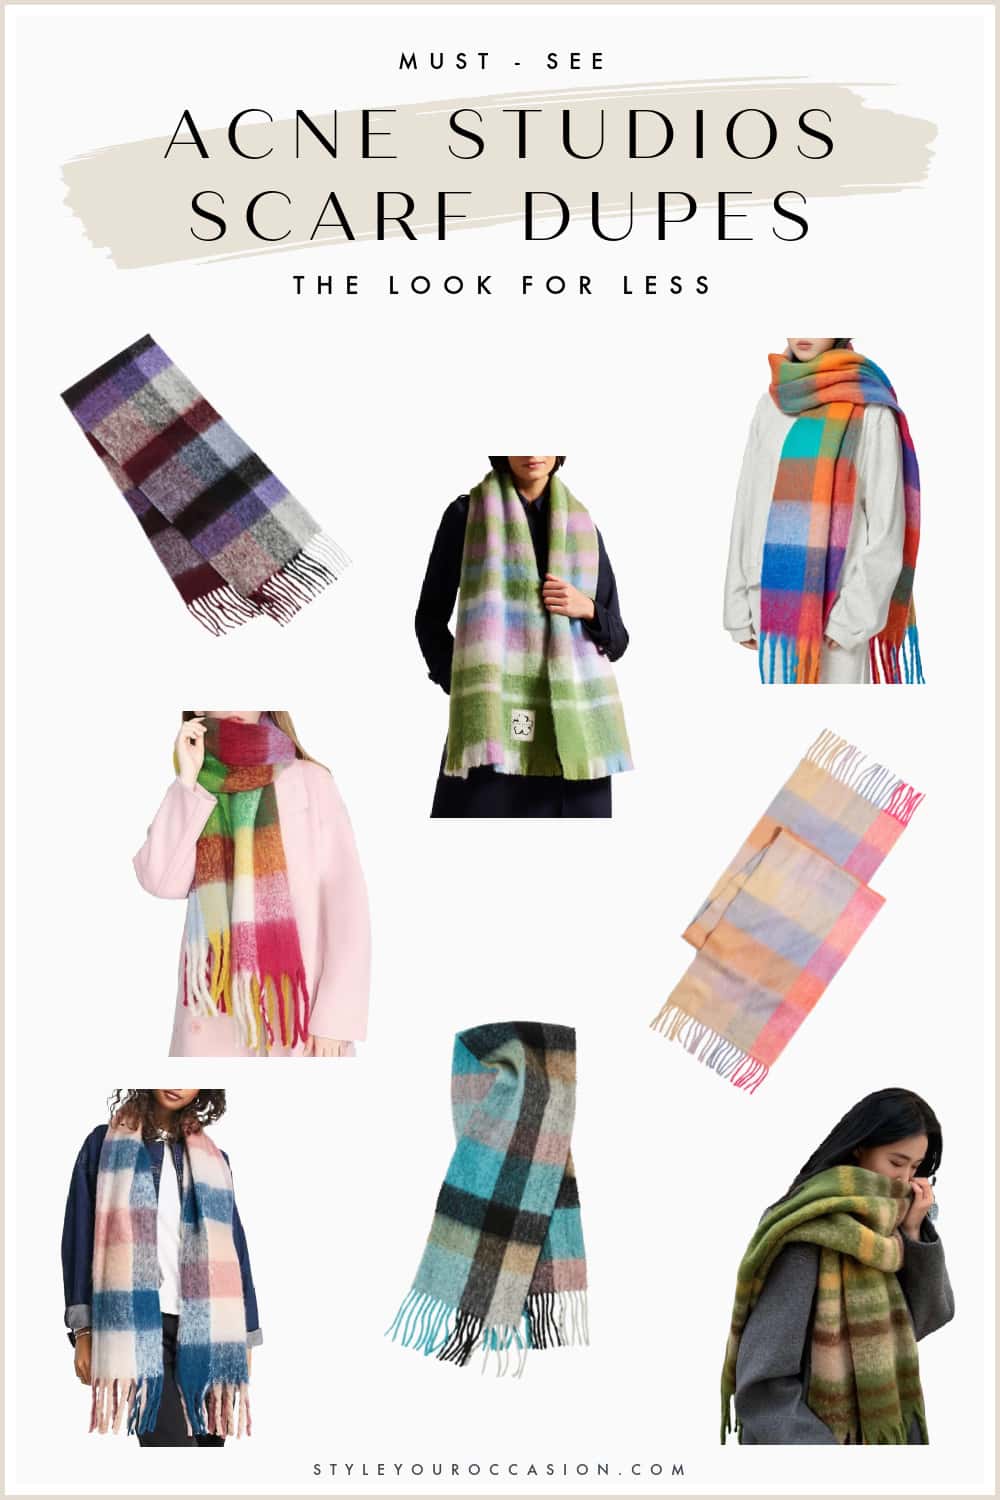 240 rainbow scarf is latest splurge of choice to beat the blues, Fashion